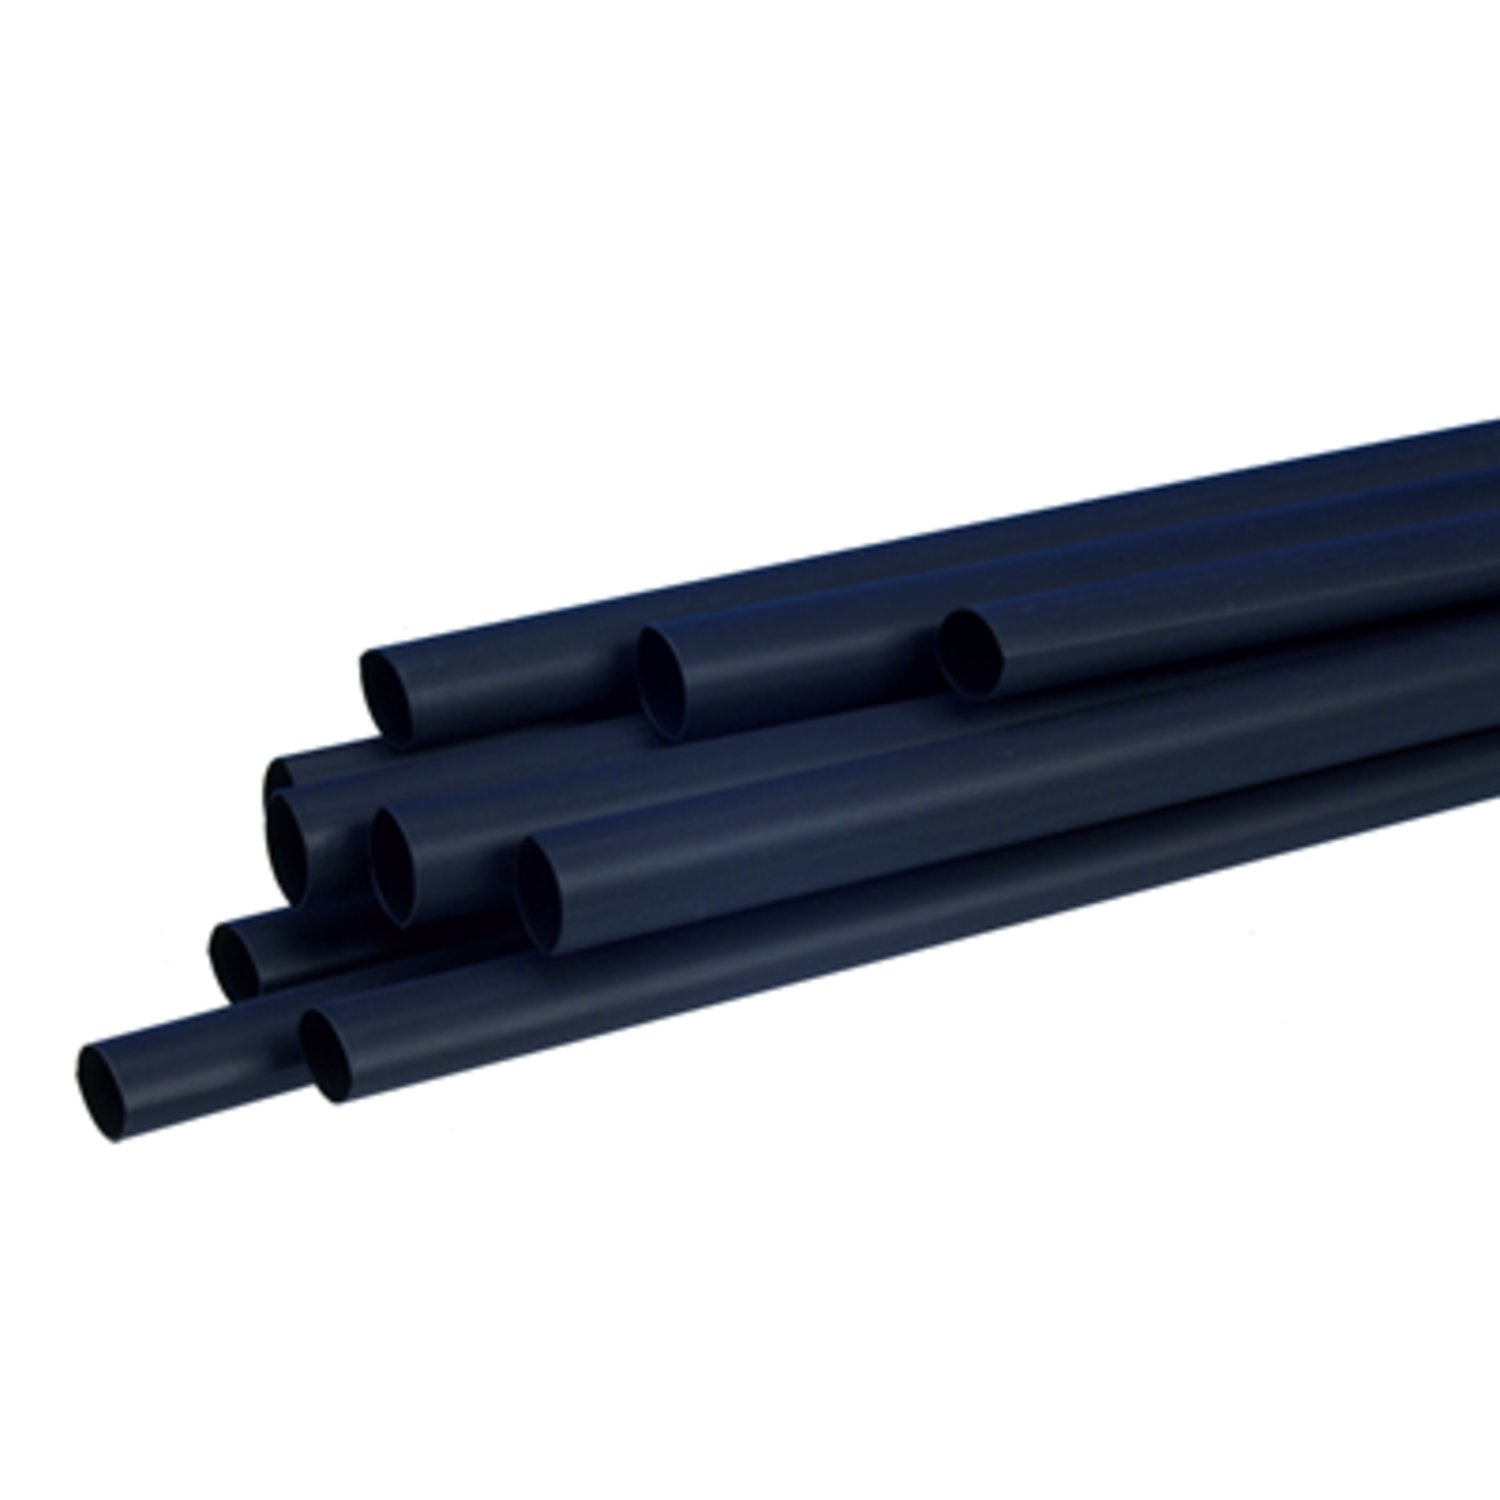 7100025058 - 3M SFTW-203 3/4" Heat Shrink Tubing Polyolefin, Black, 18.0/6.0 mm,
1.22 m Piece